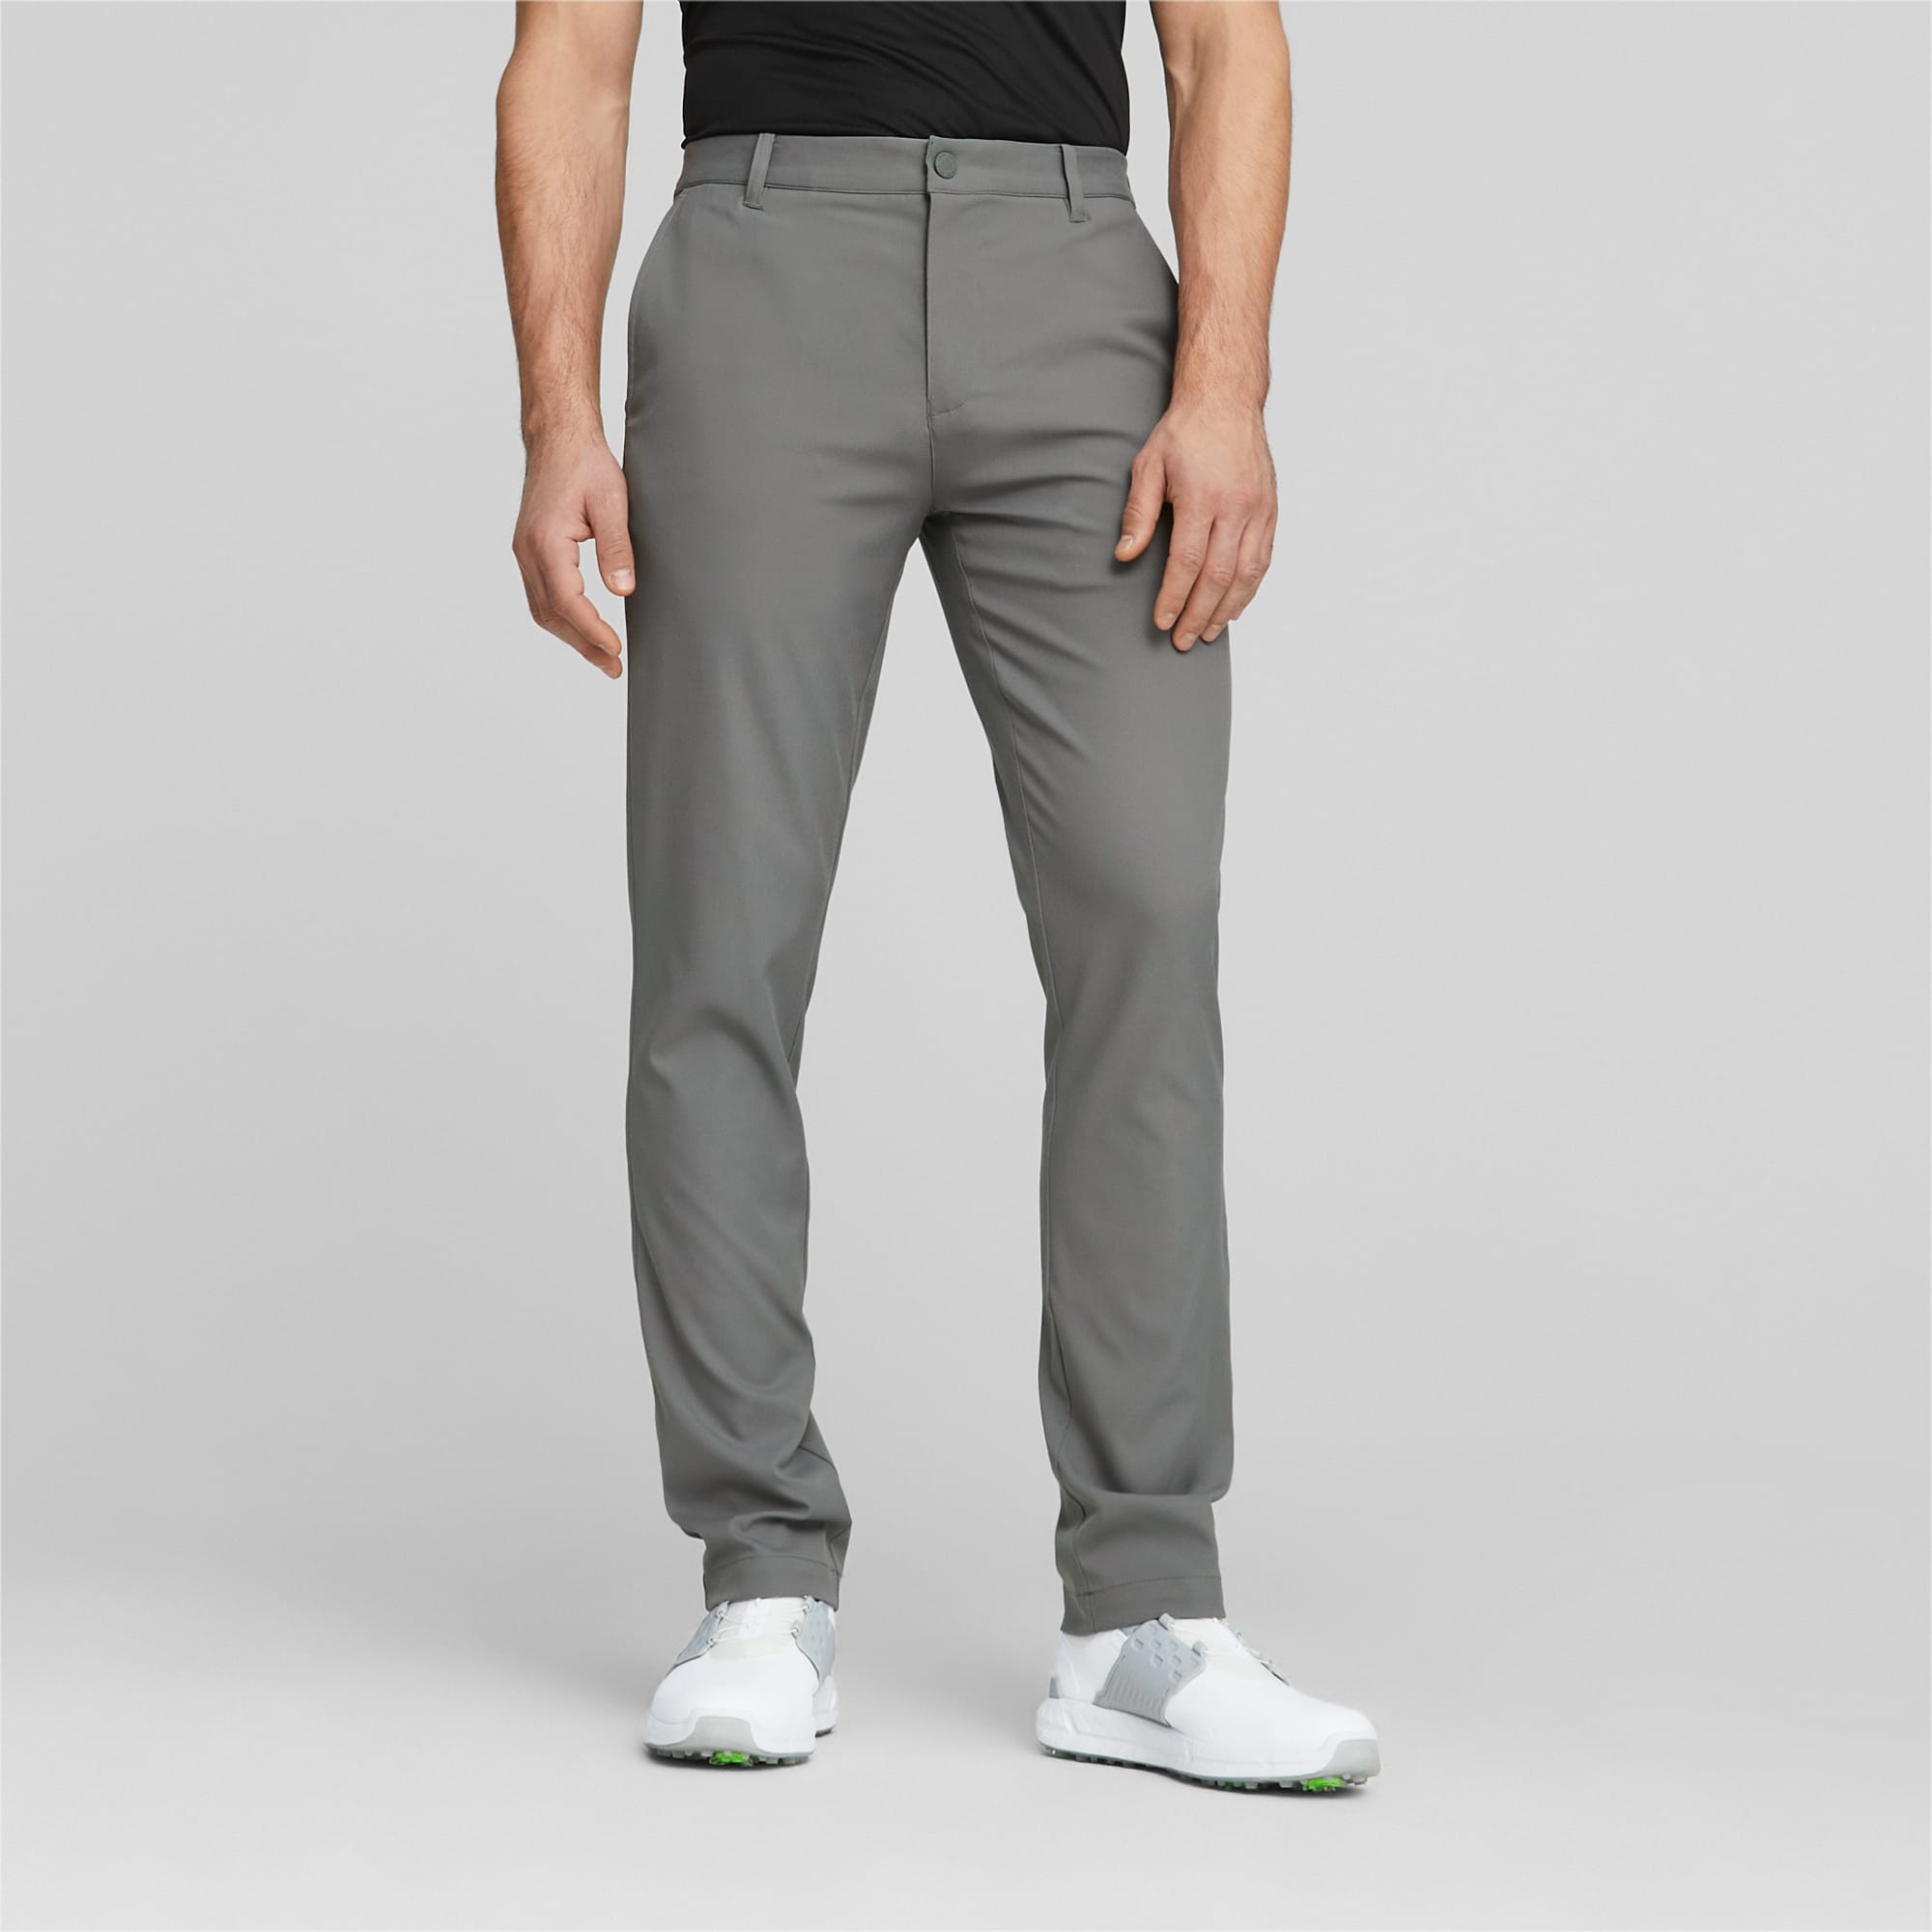 PUMA Dealer Tailored Golf Pants Men, Slate Sky, Size 34/36, Clothing